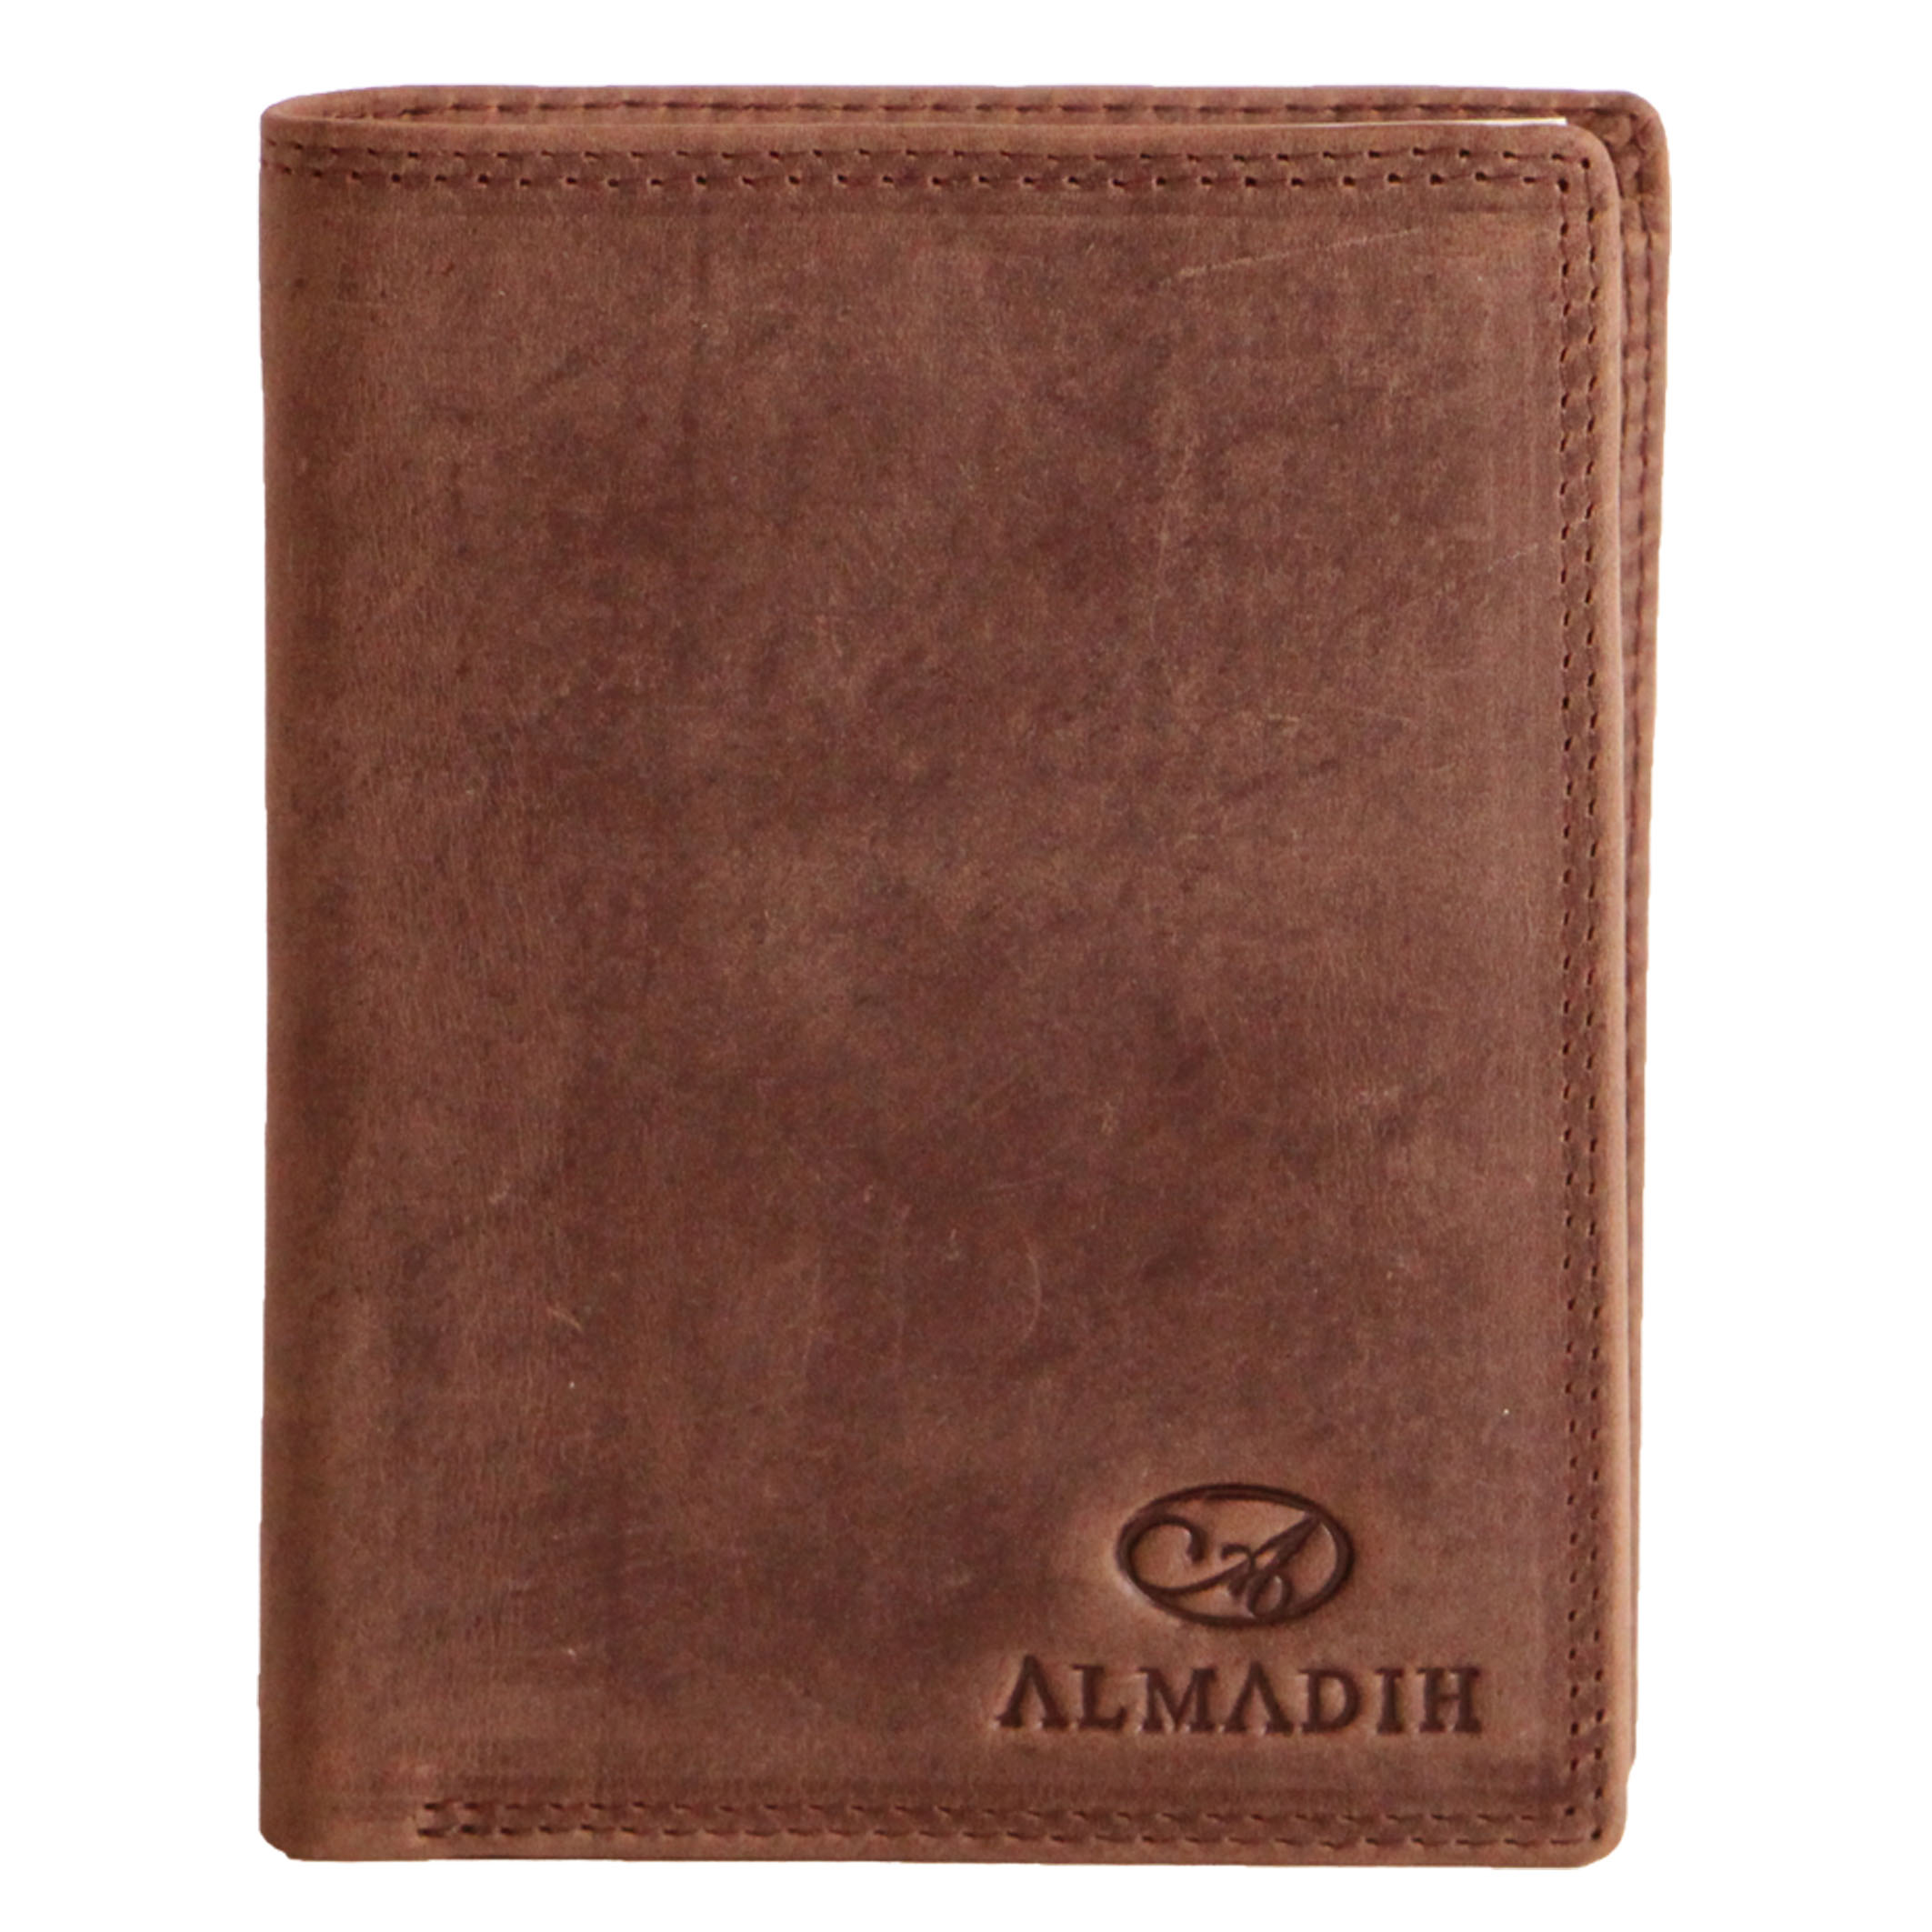 P2H ALMADIH Leder Portemonnaie Braun Vintage